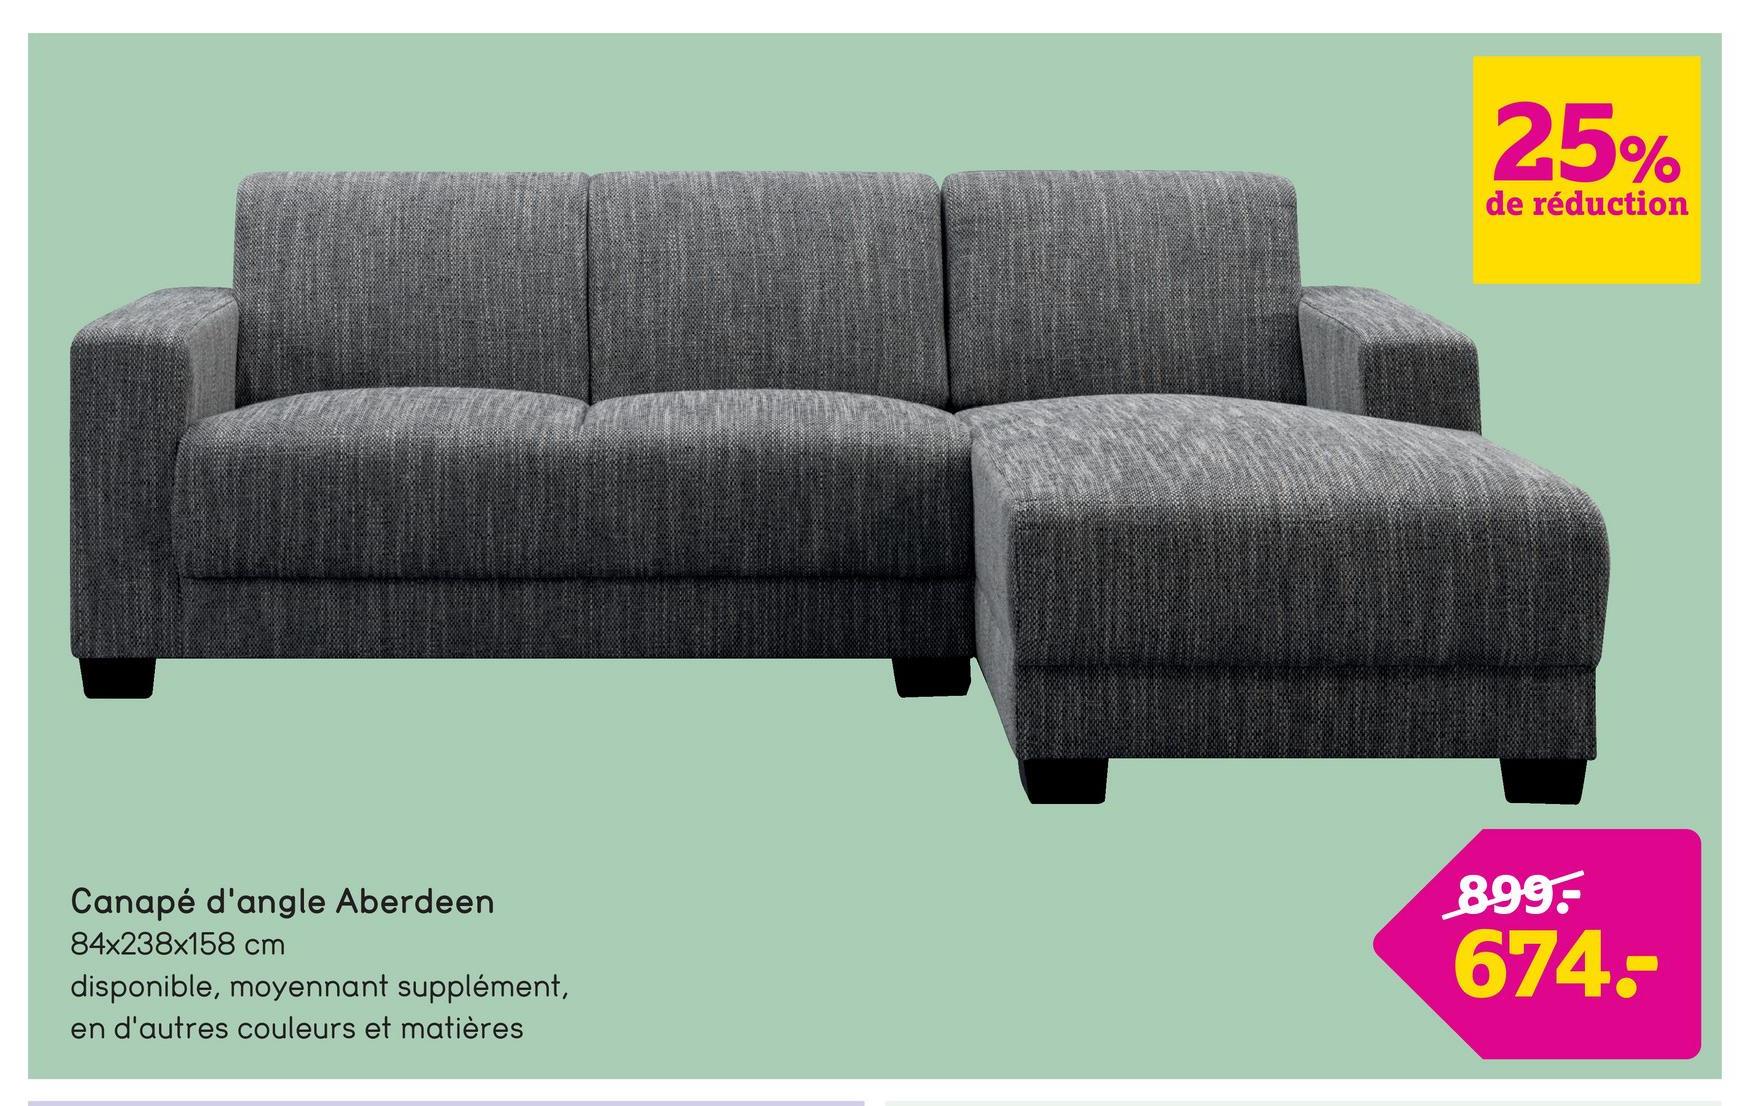 Canapé d'angle Aberdeen droite - tissu - gris